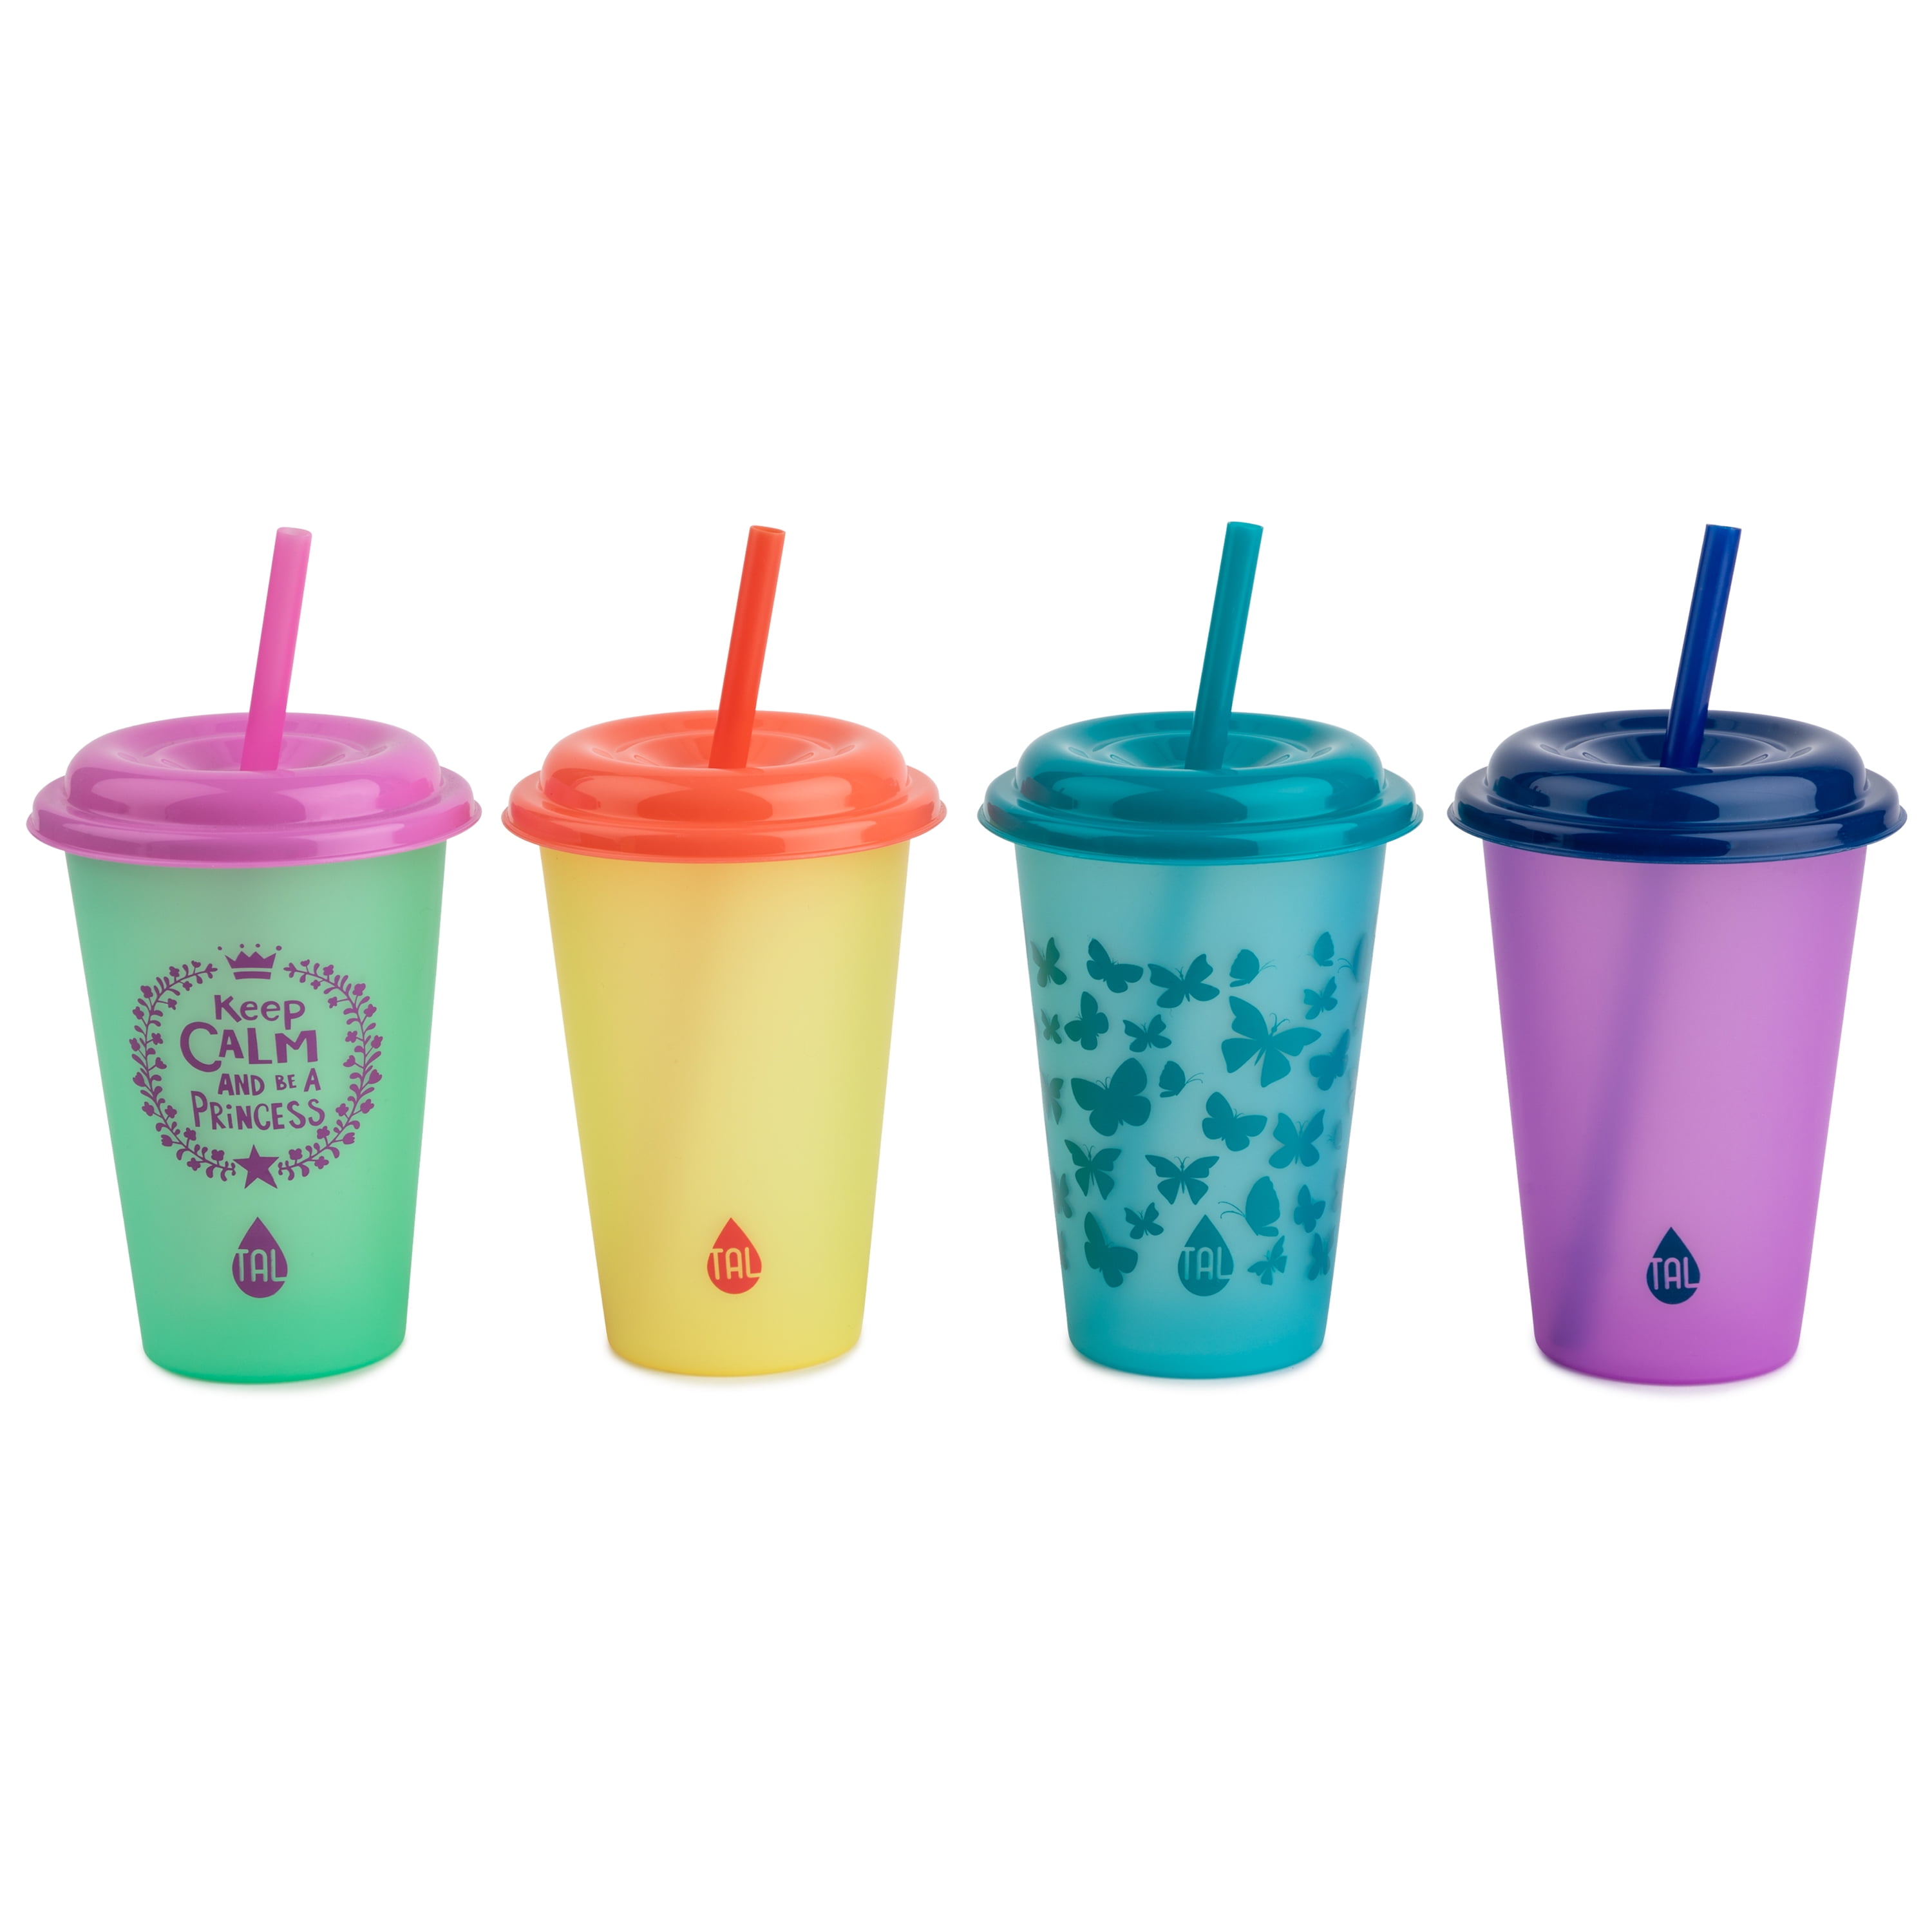 TAL Polypropylene Color Changing Cups 12 fl oz, Multi-Color